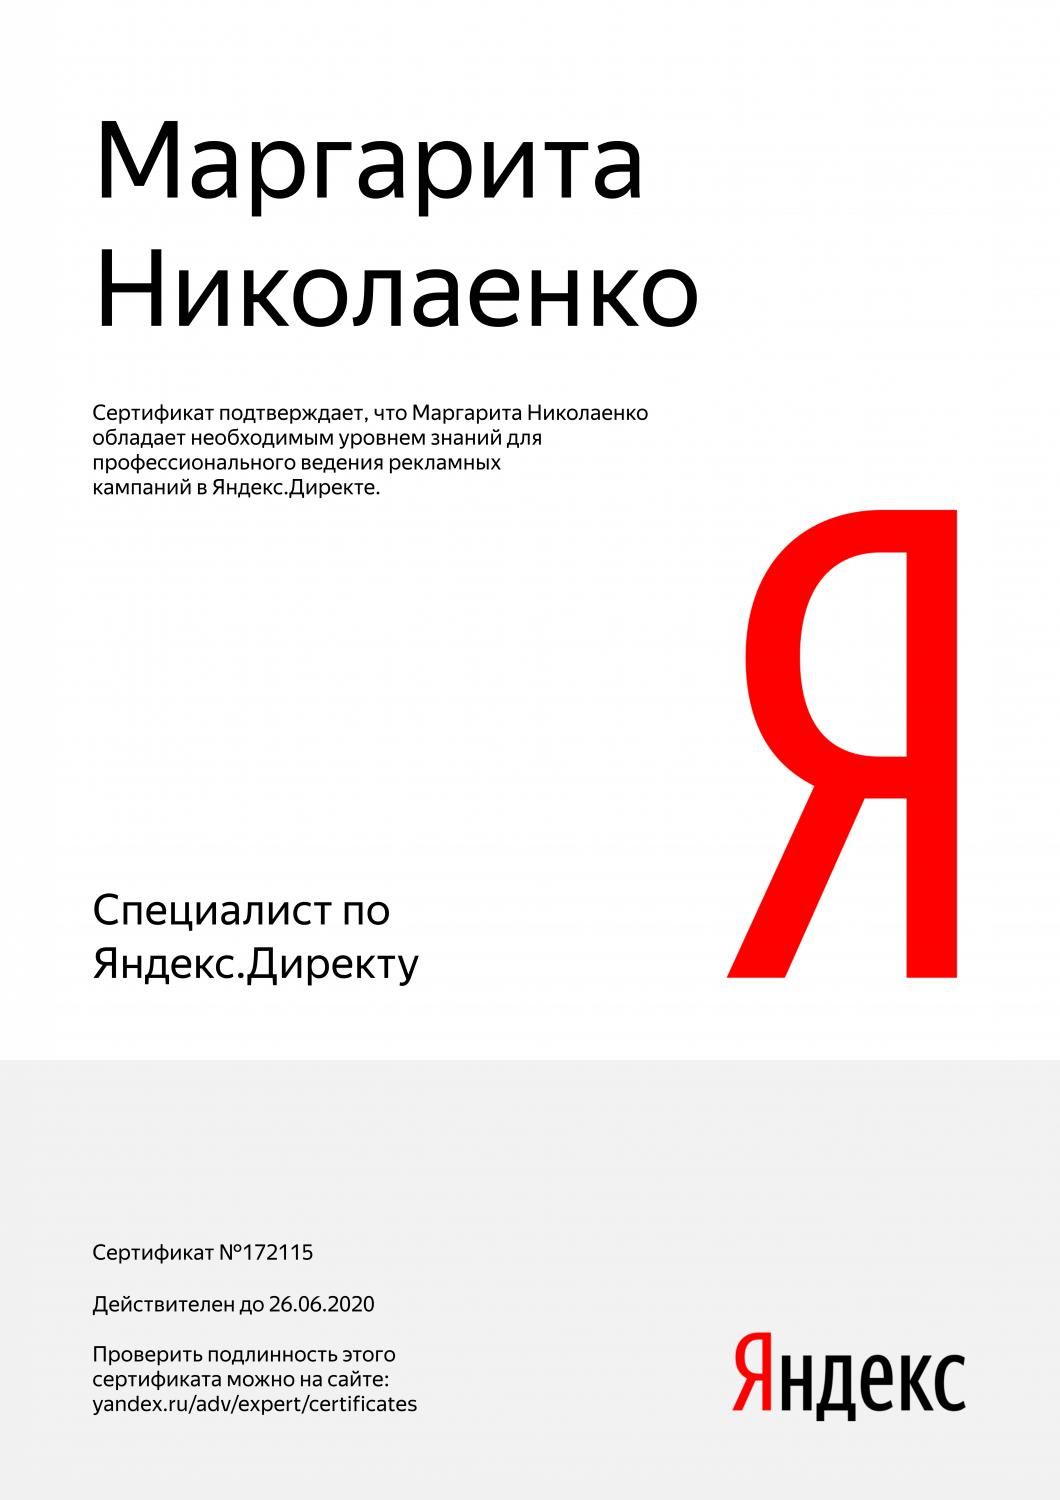 Сертификат специалиста Яндекс. Директ - Николаенко М. в Вологды